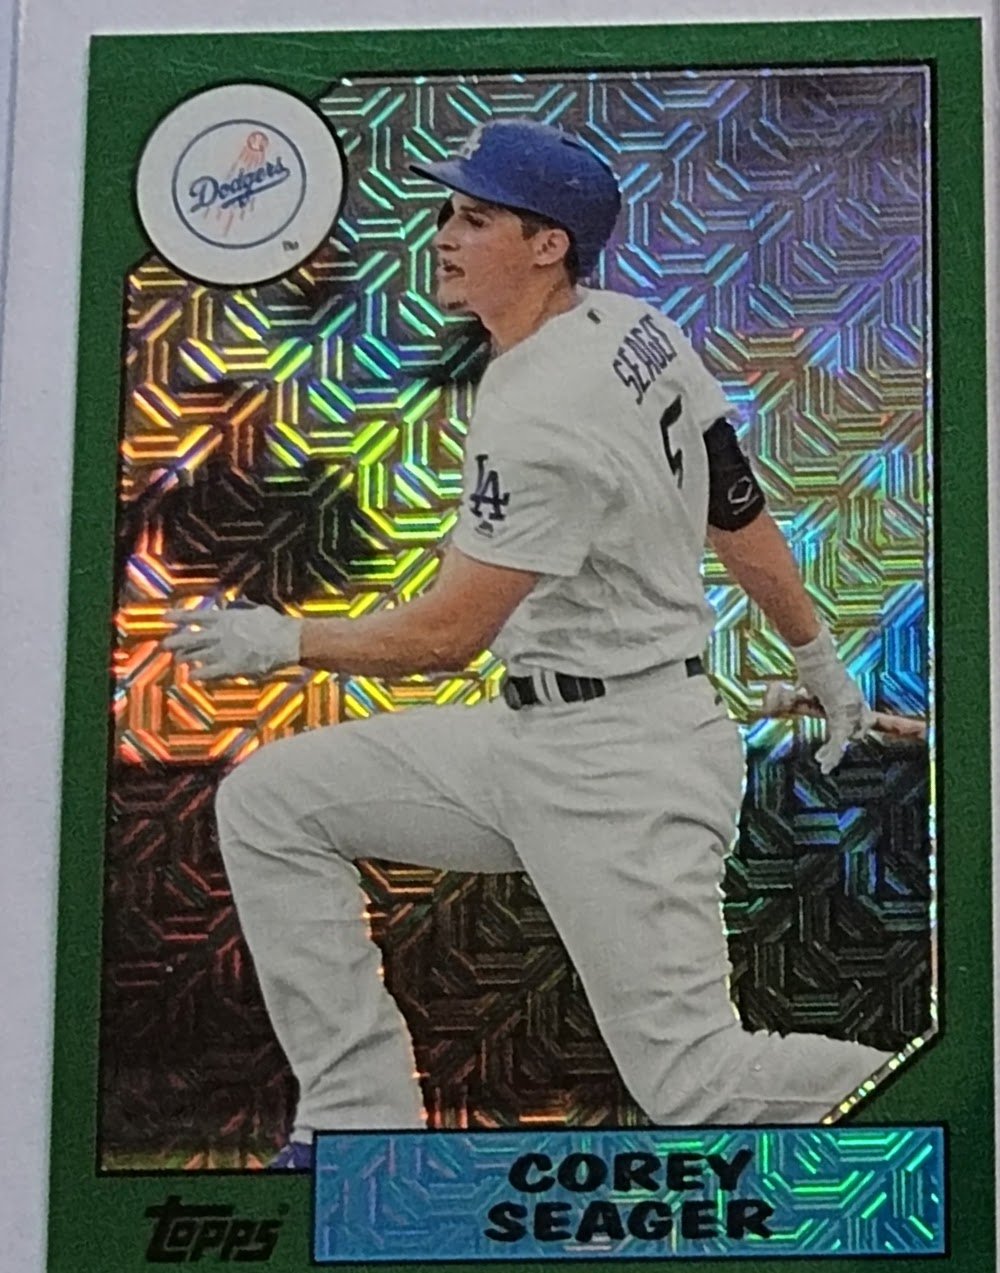 2023 Topps Baseball Card, Corey Seager